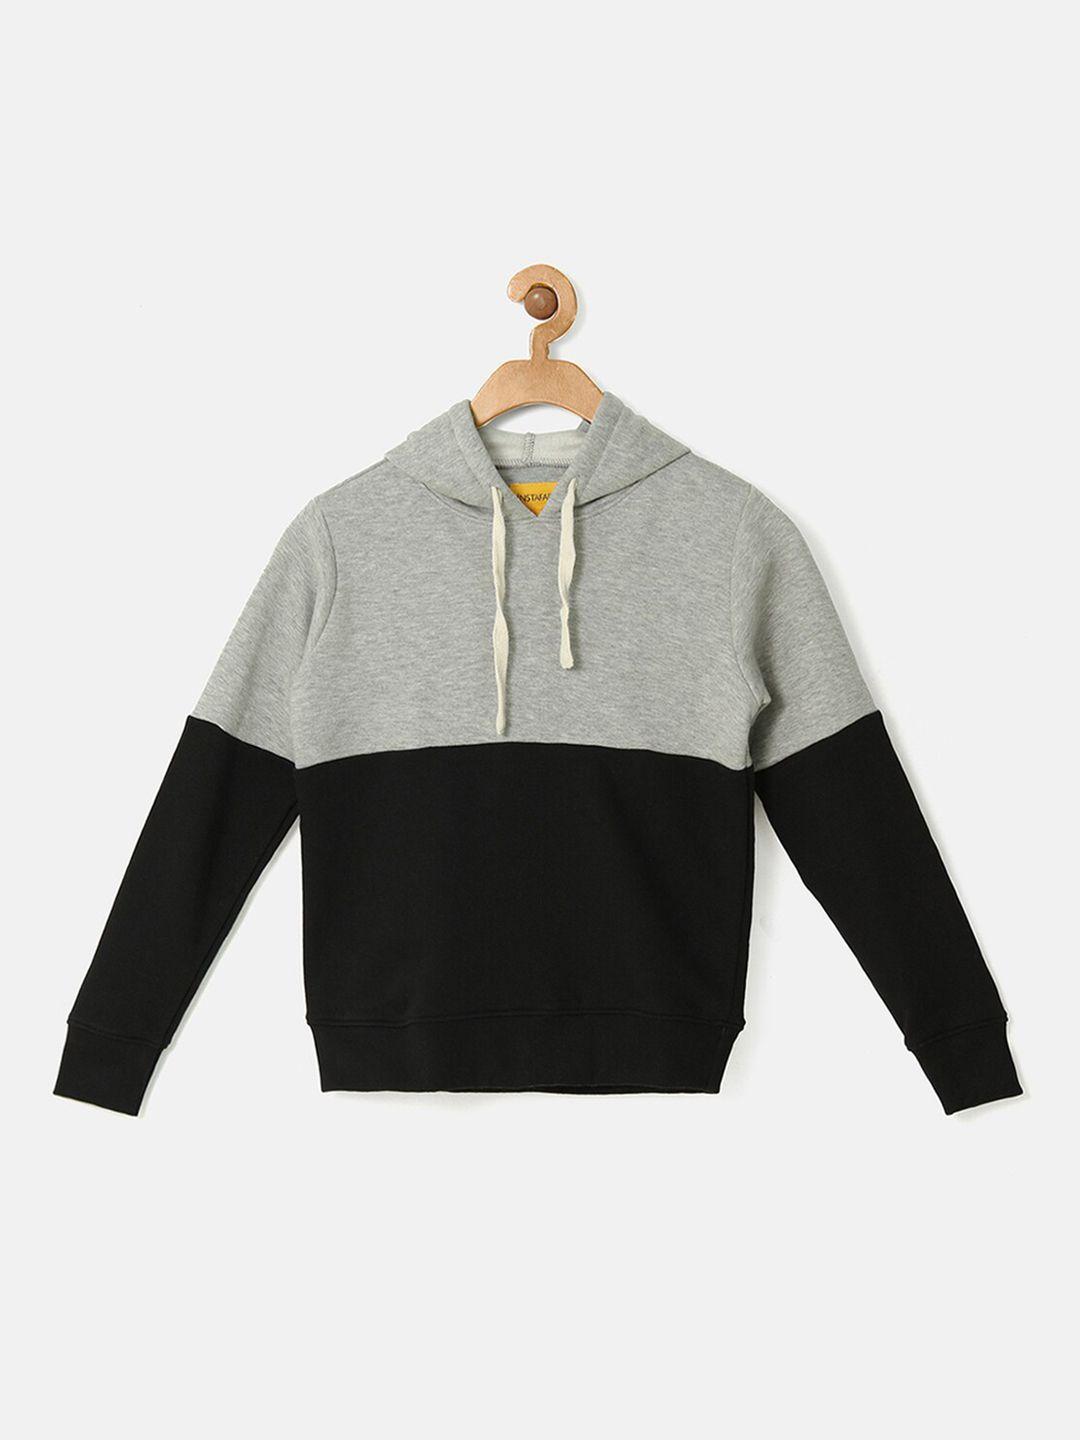 instafab boys grey & black colourblocked hooded sweatshirt